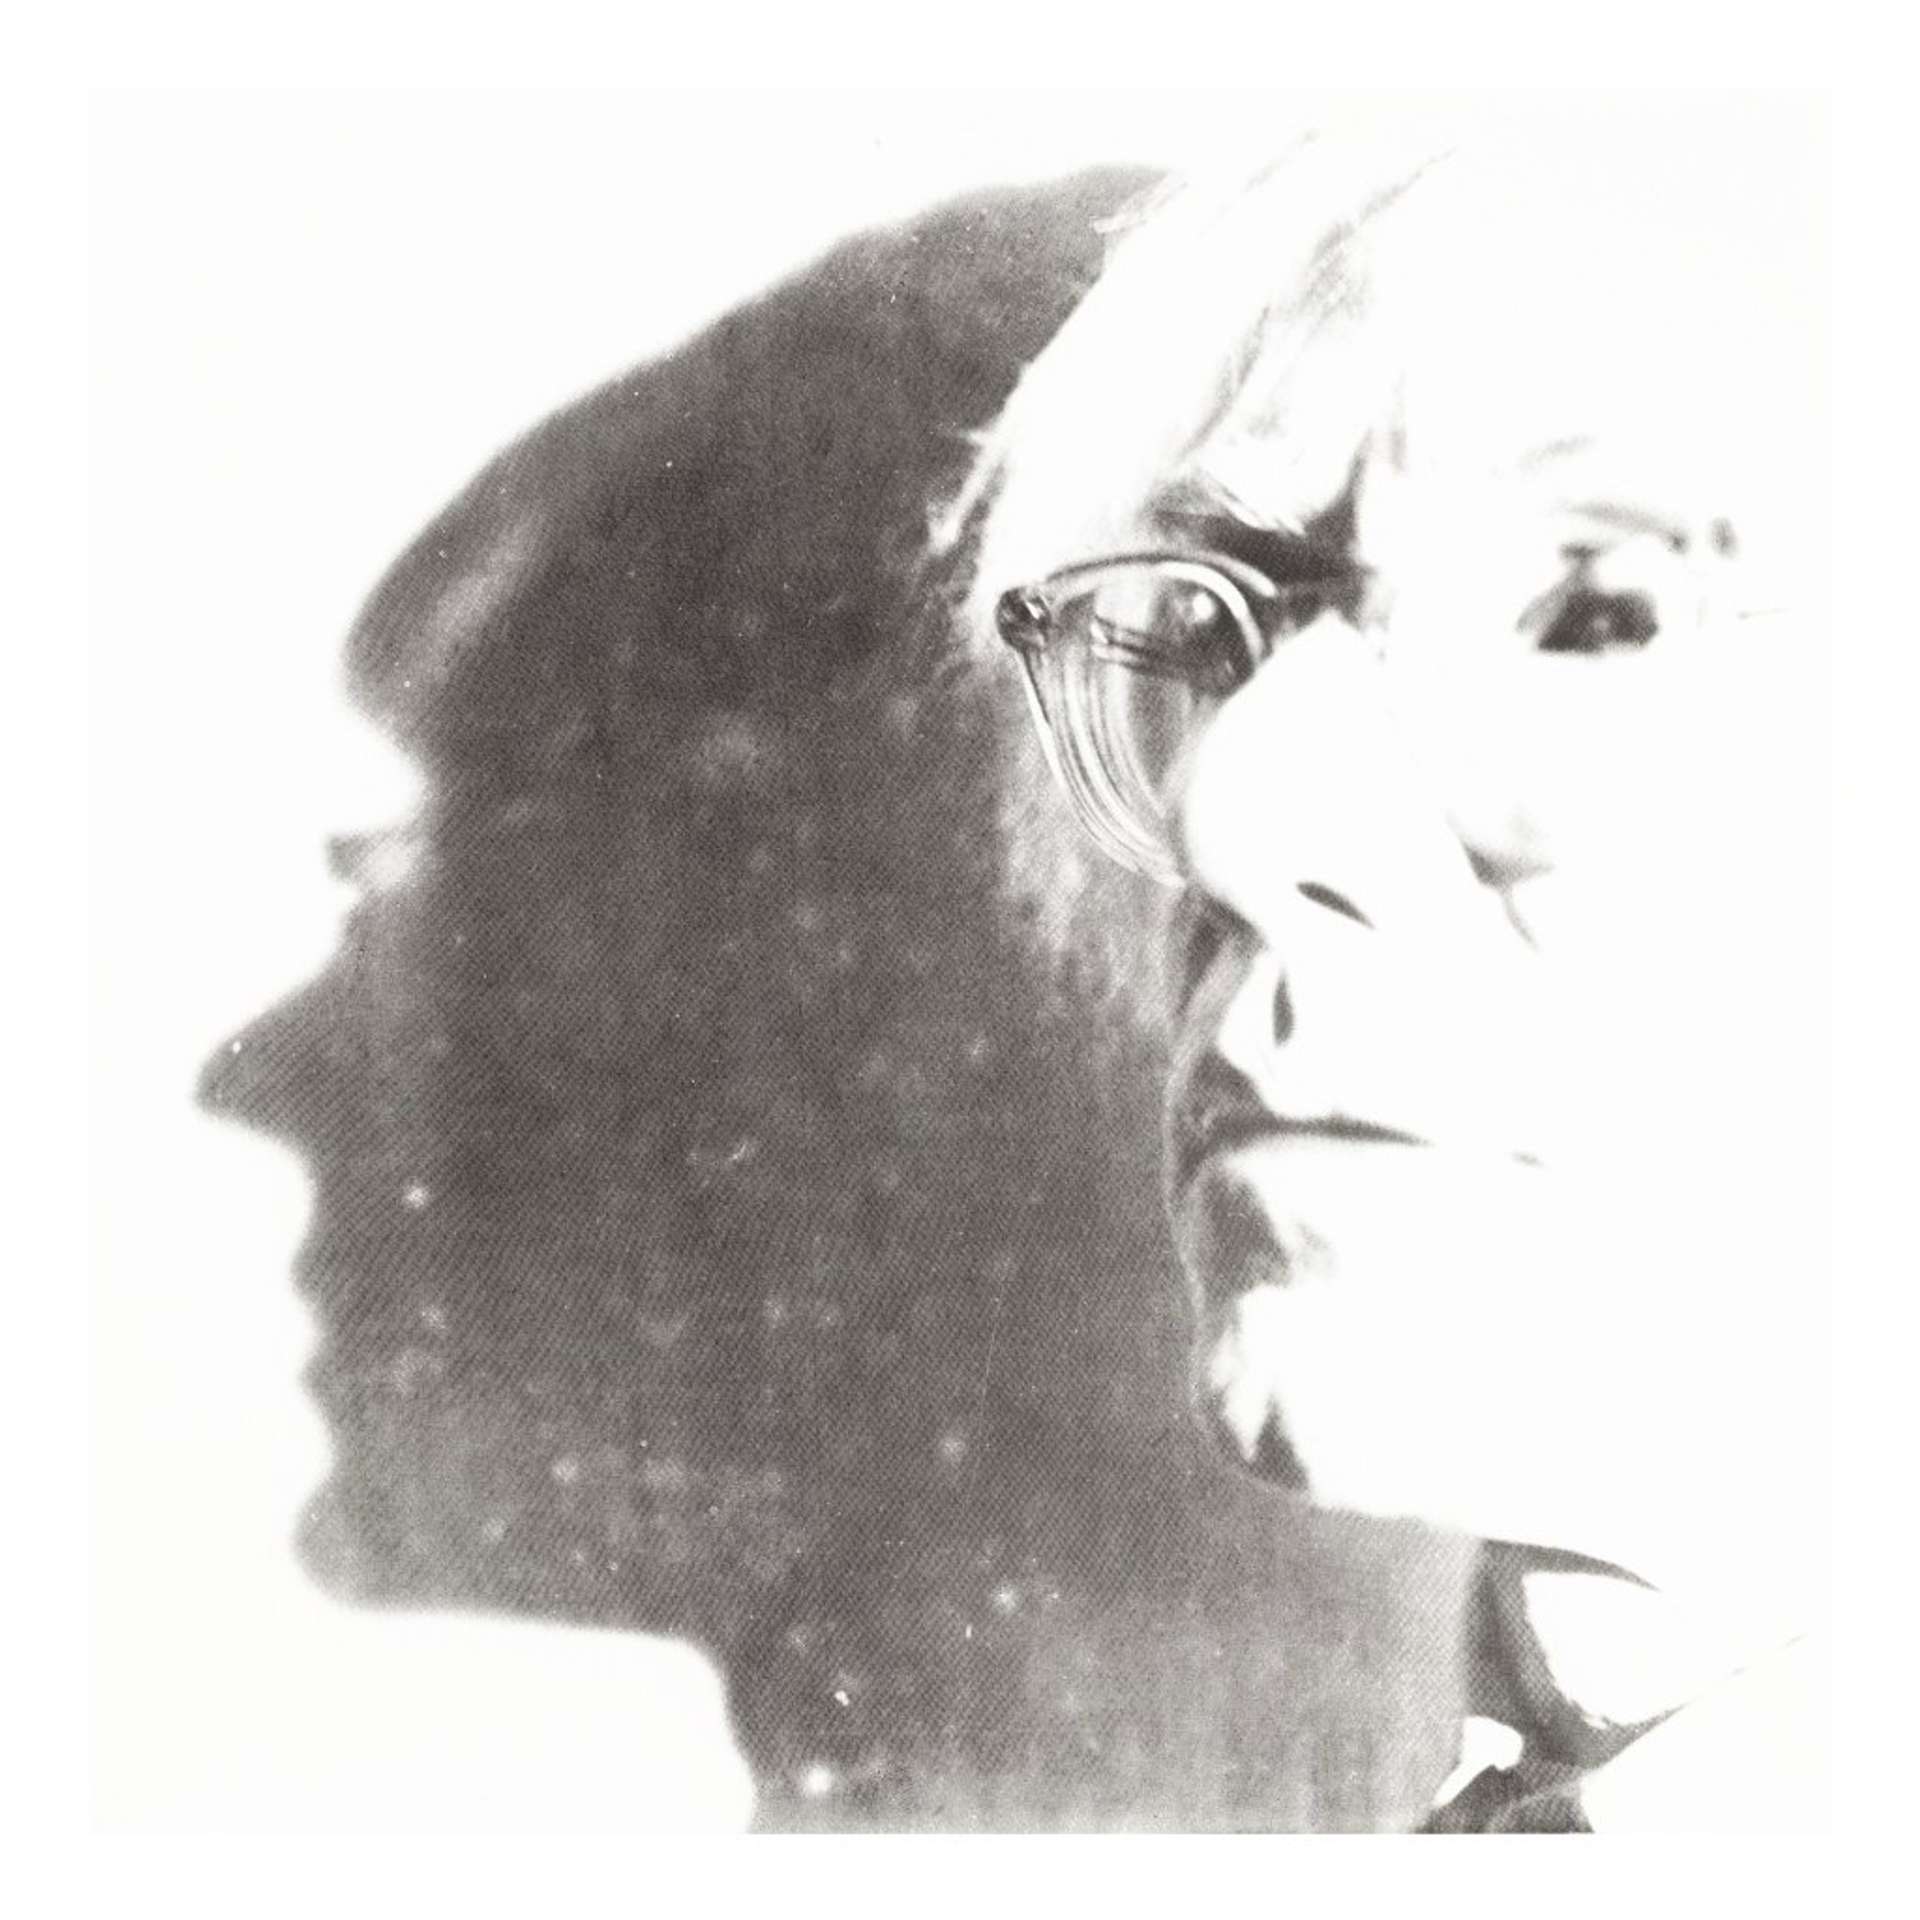 The Shadow (unique) © Andy Warhol 1981